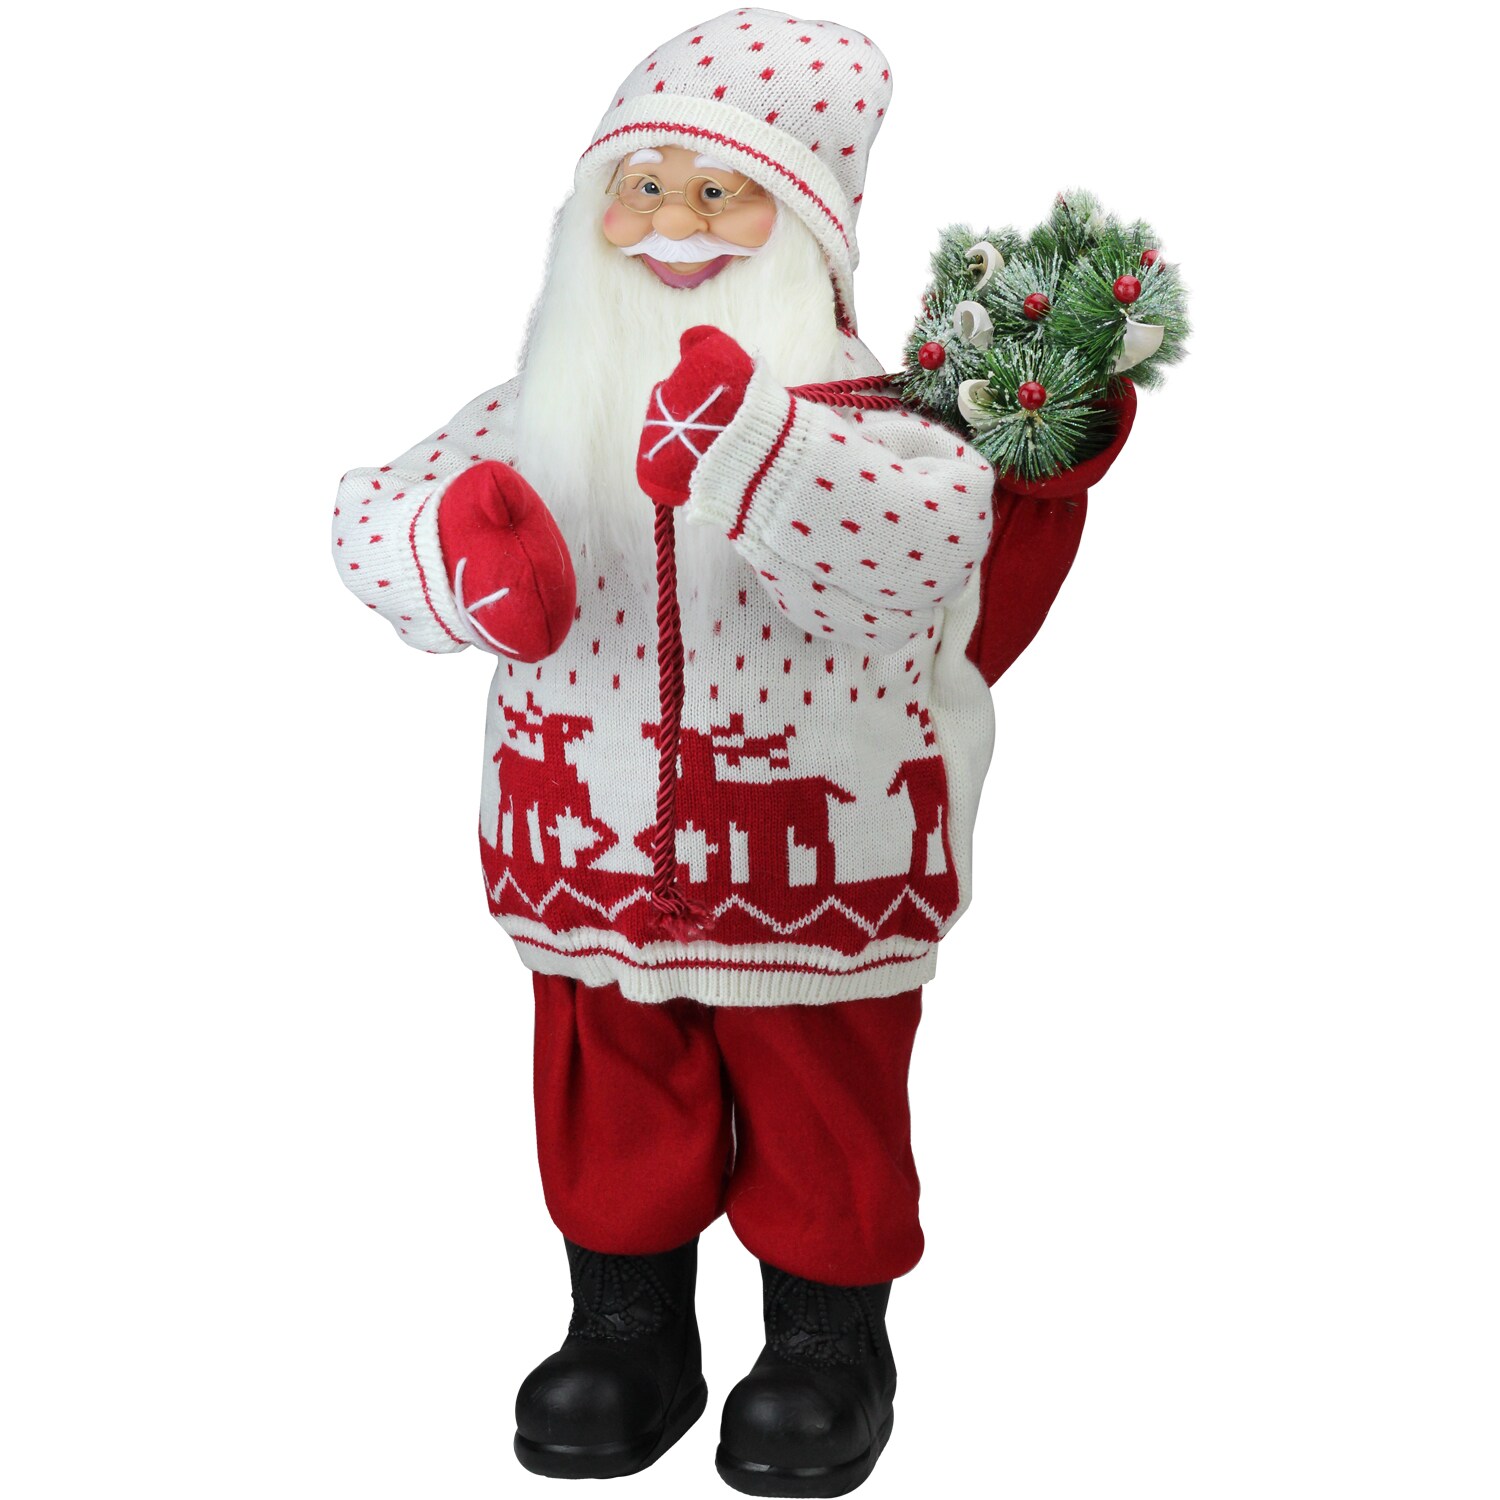 Northlight 18" Santa Claus in Knit Sweater Christmas Figure Skis Lantern 